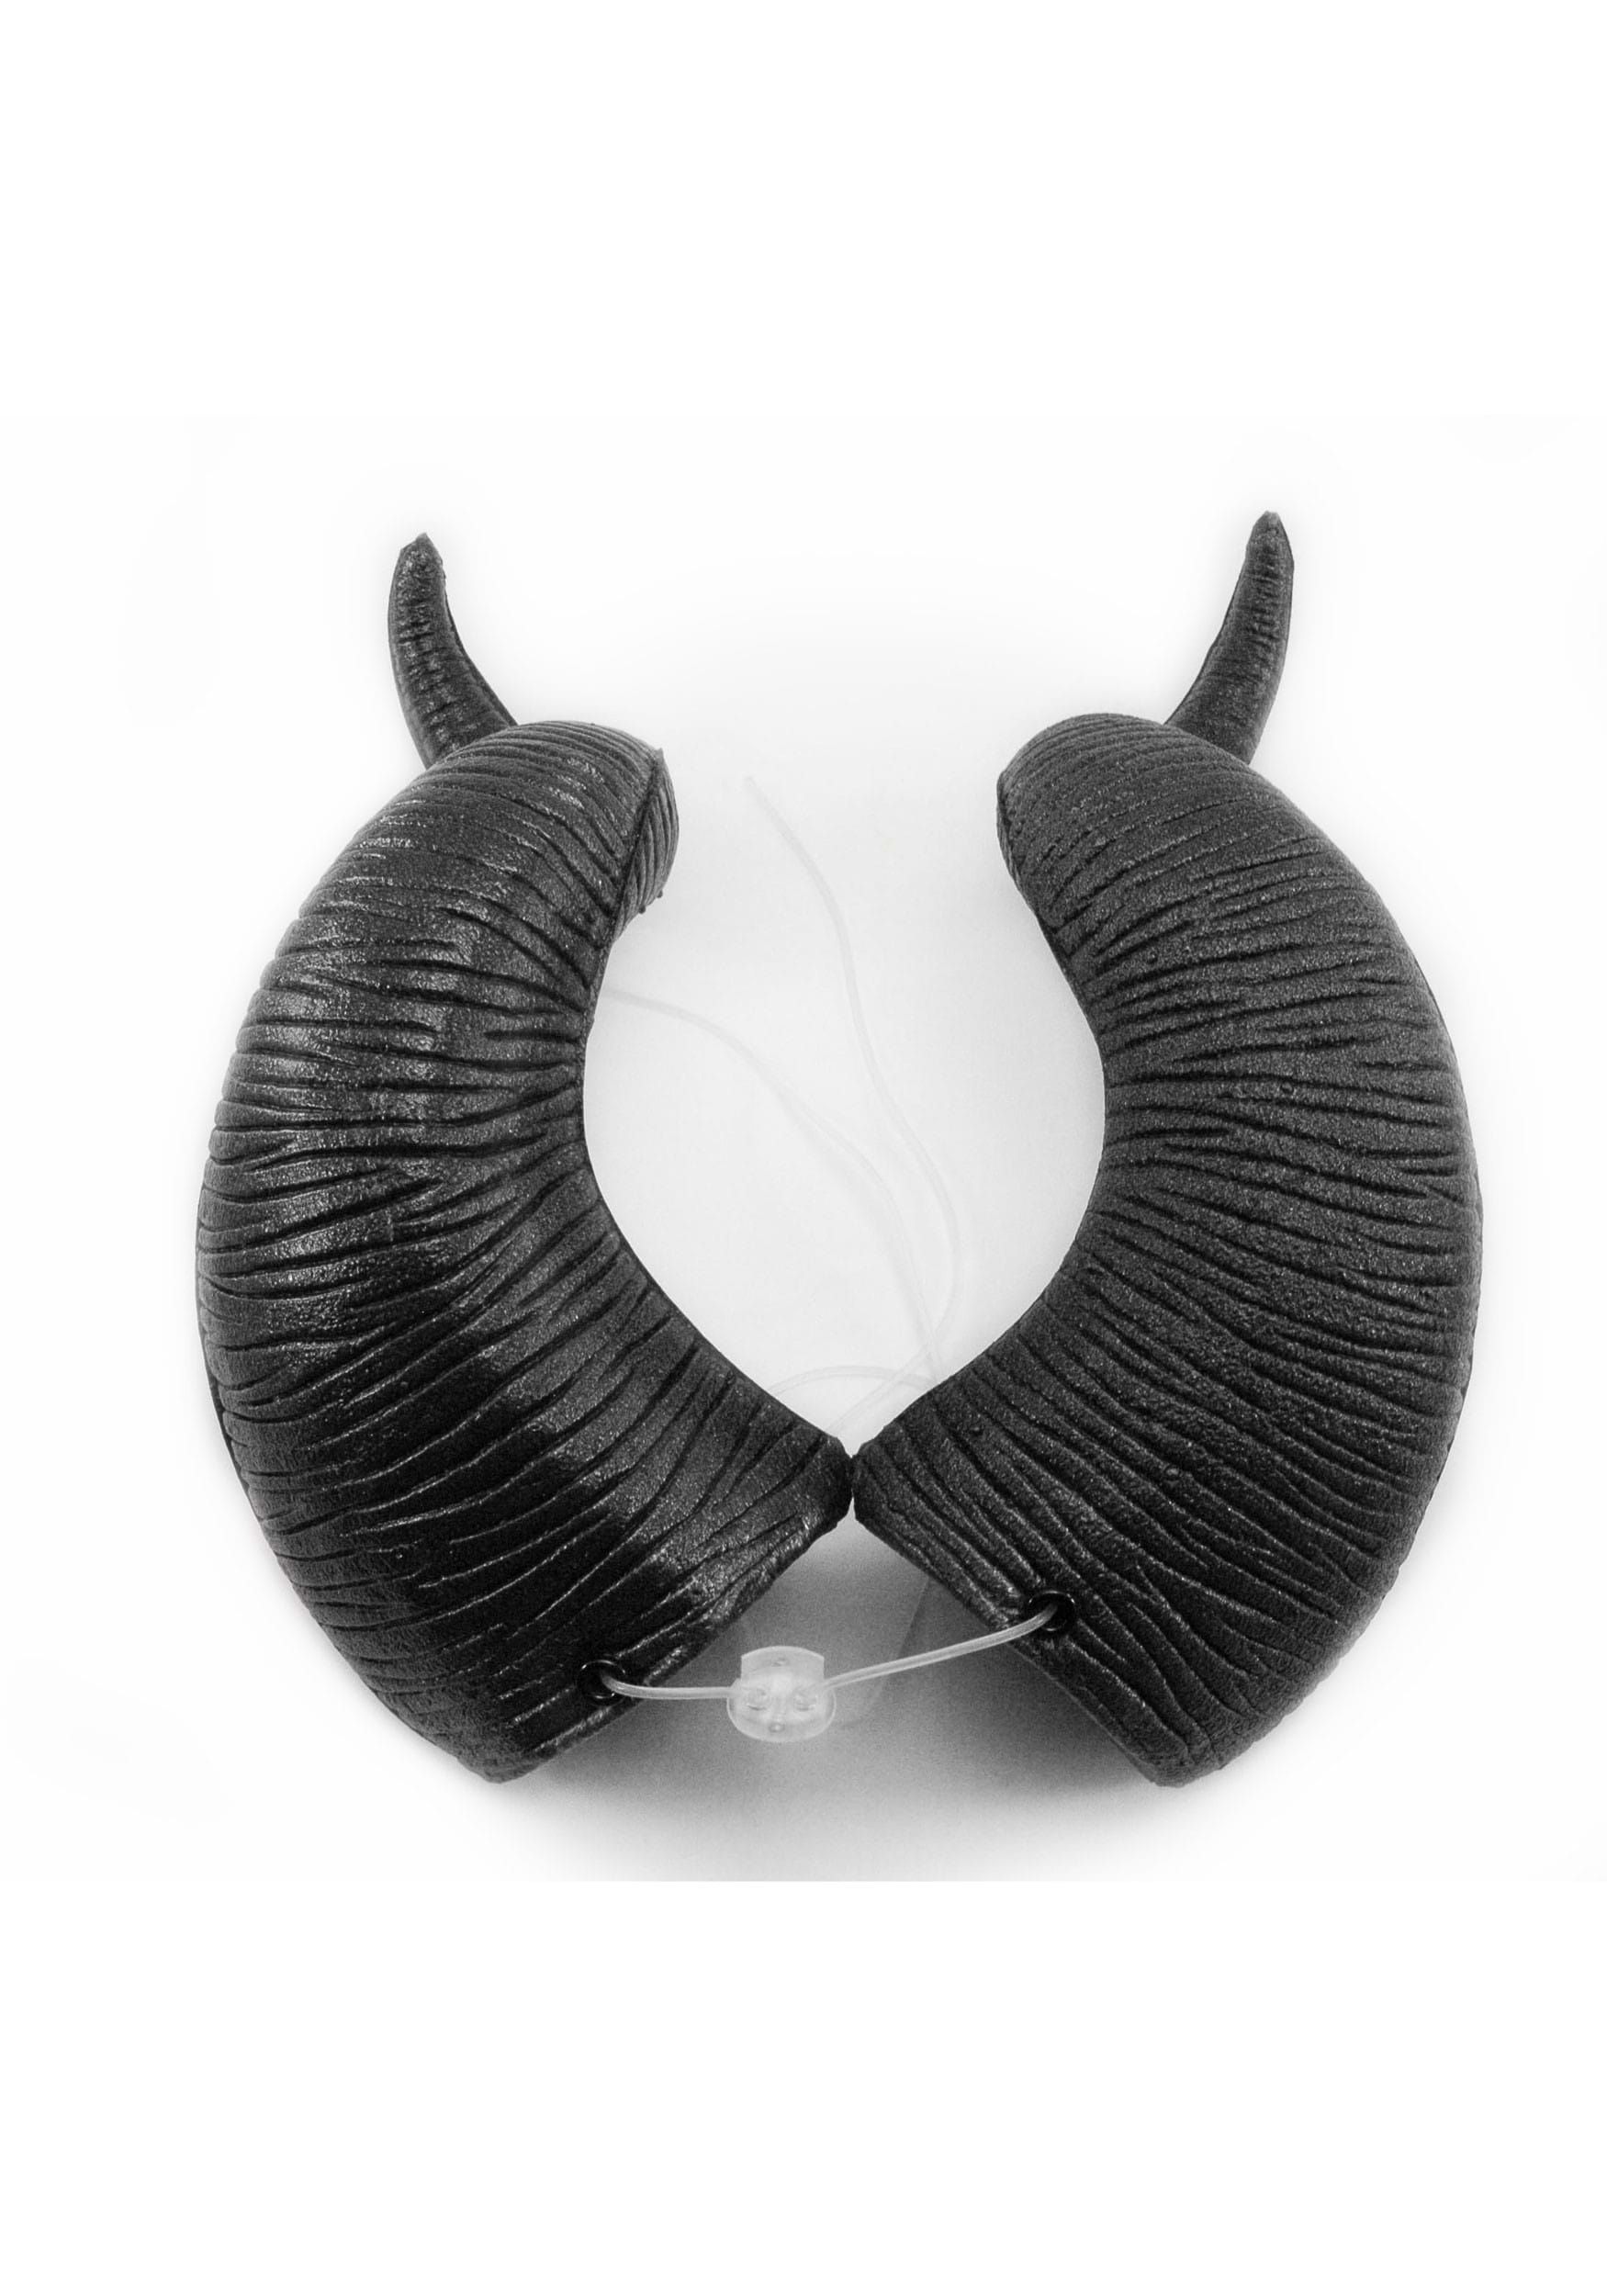 Maleficent Costume Horns Pair